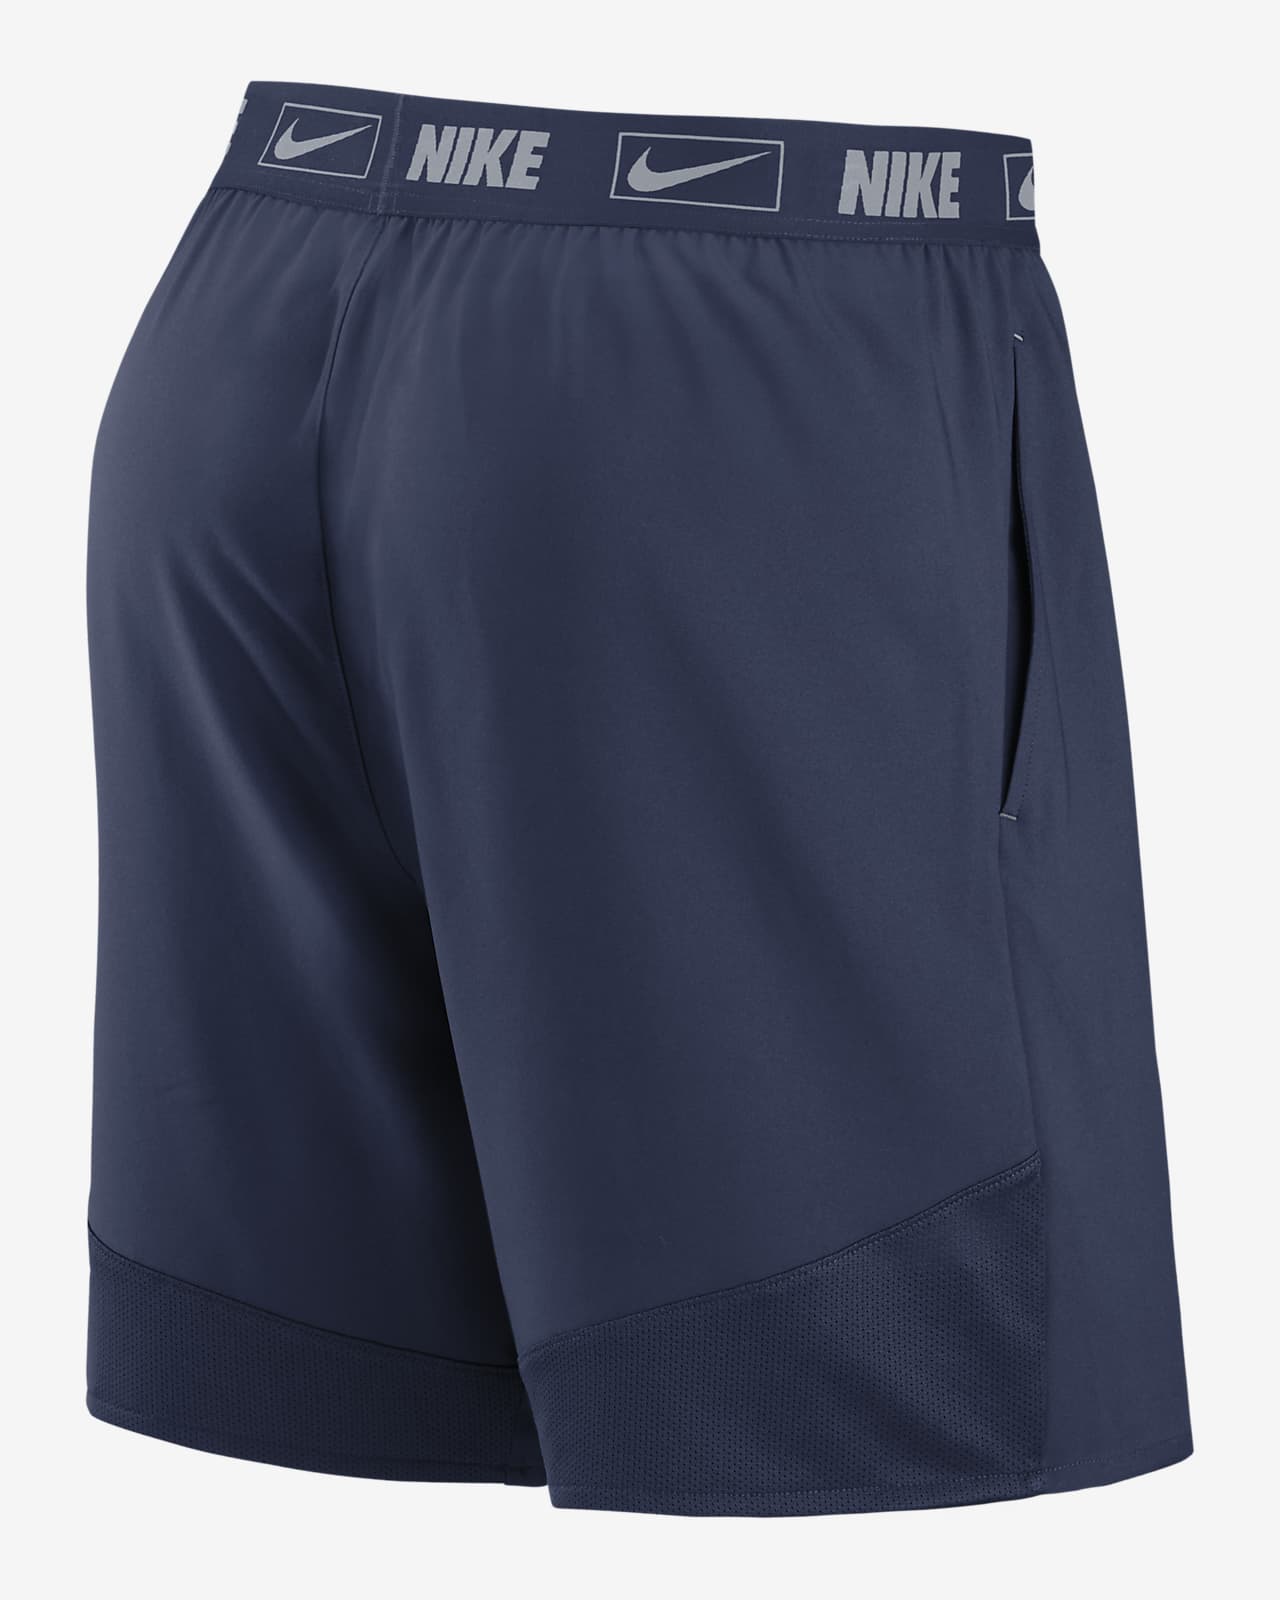 Nike Dri-FIT Flex (MLB Kansas City Royals) Men's Shorts.